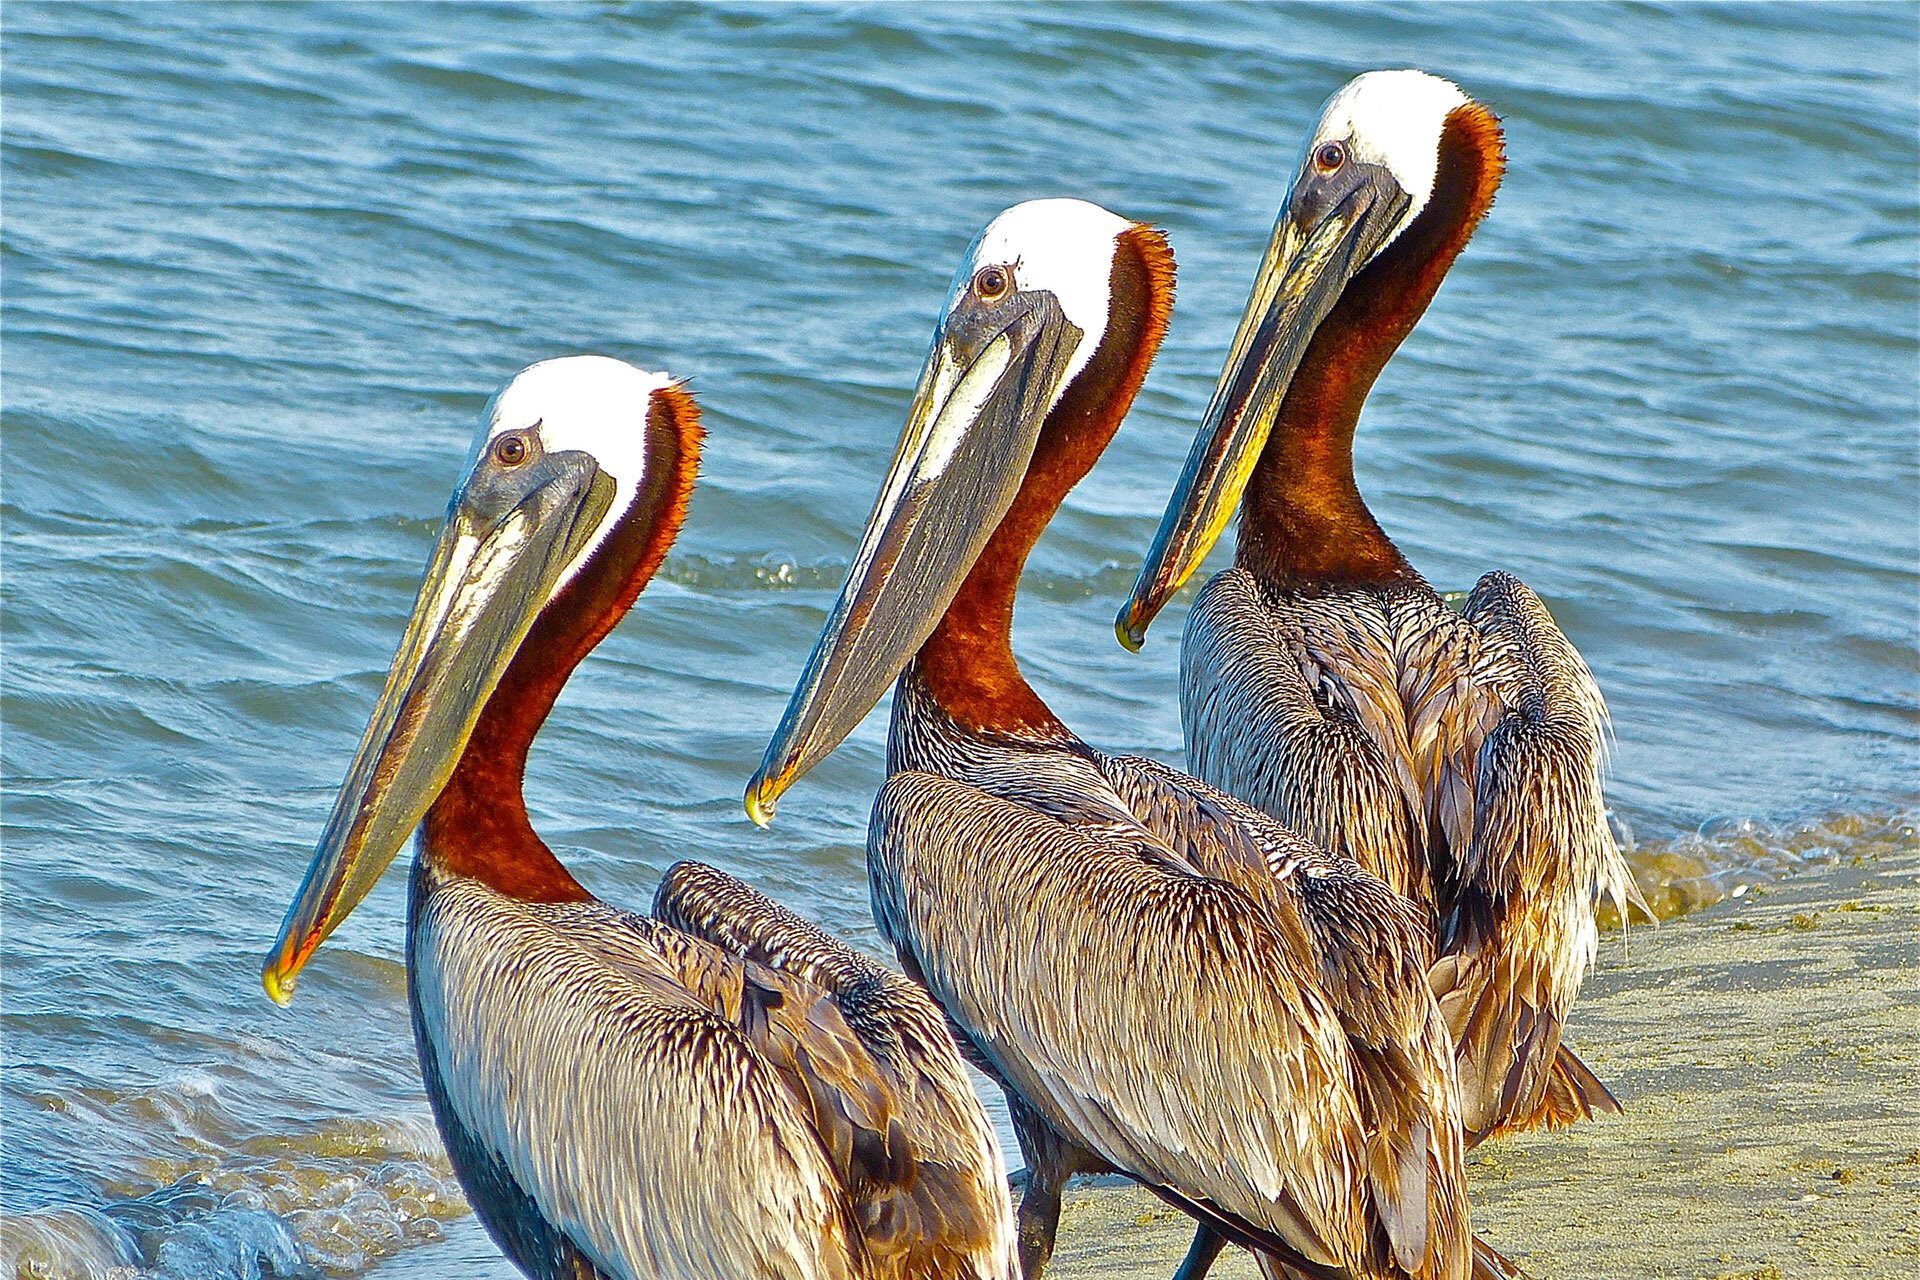 Pelicans sun bathing